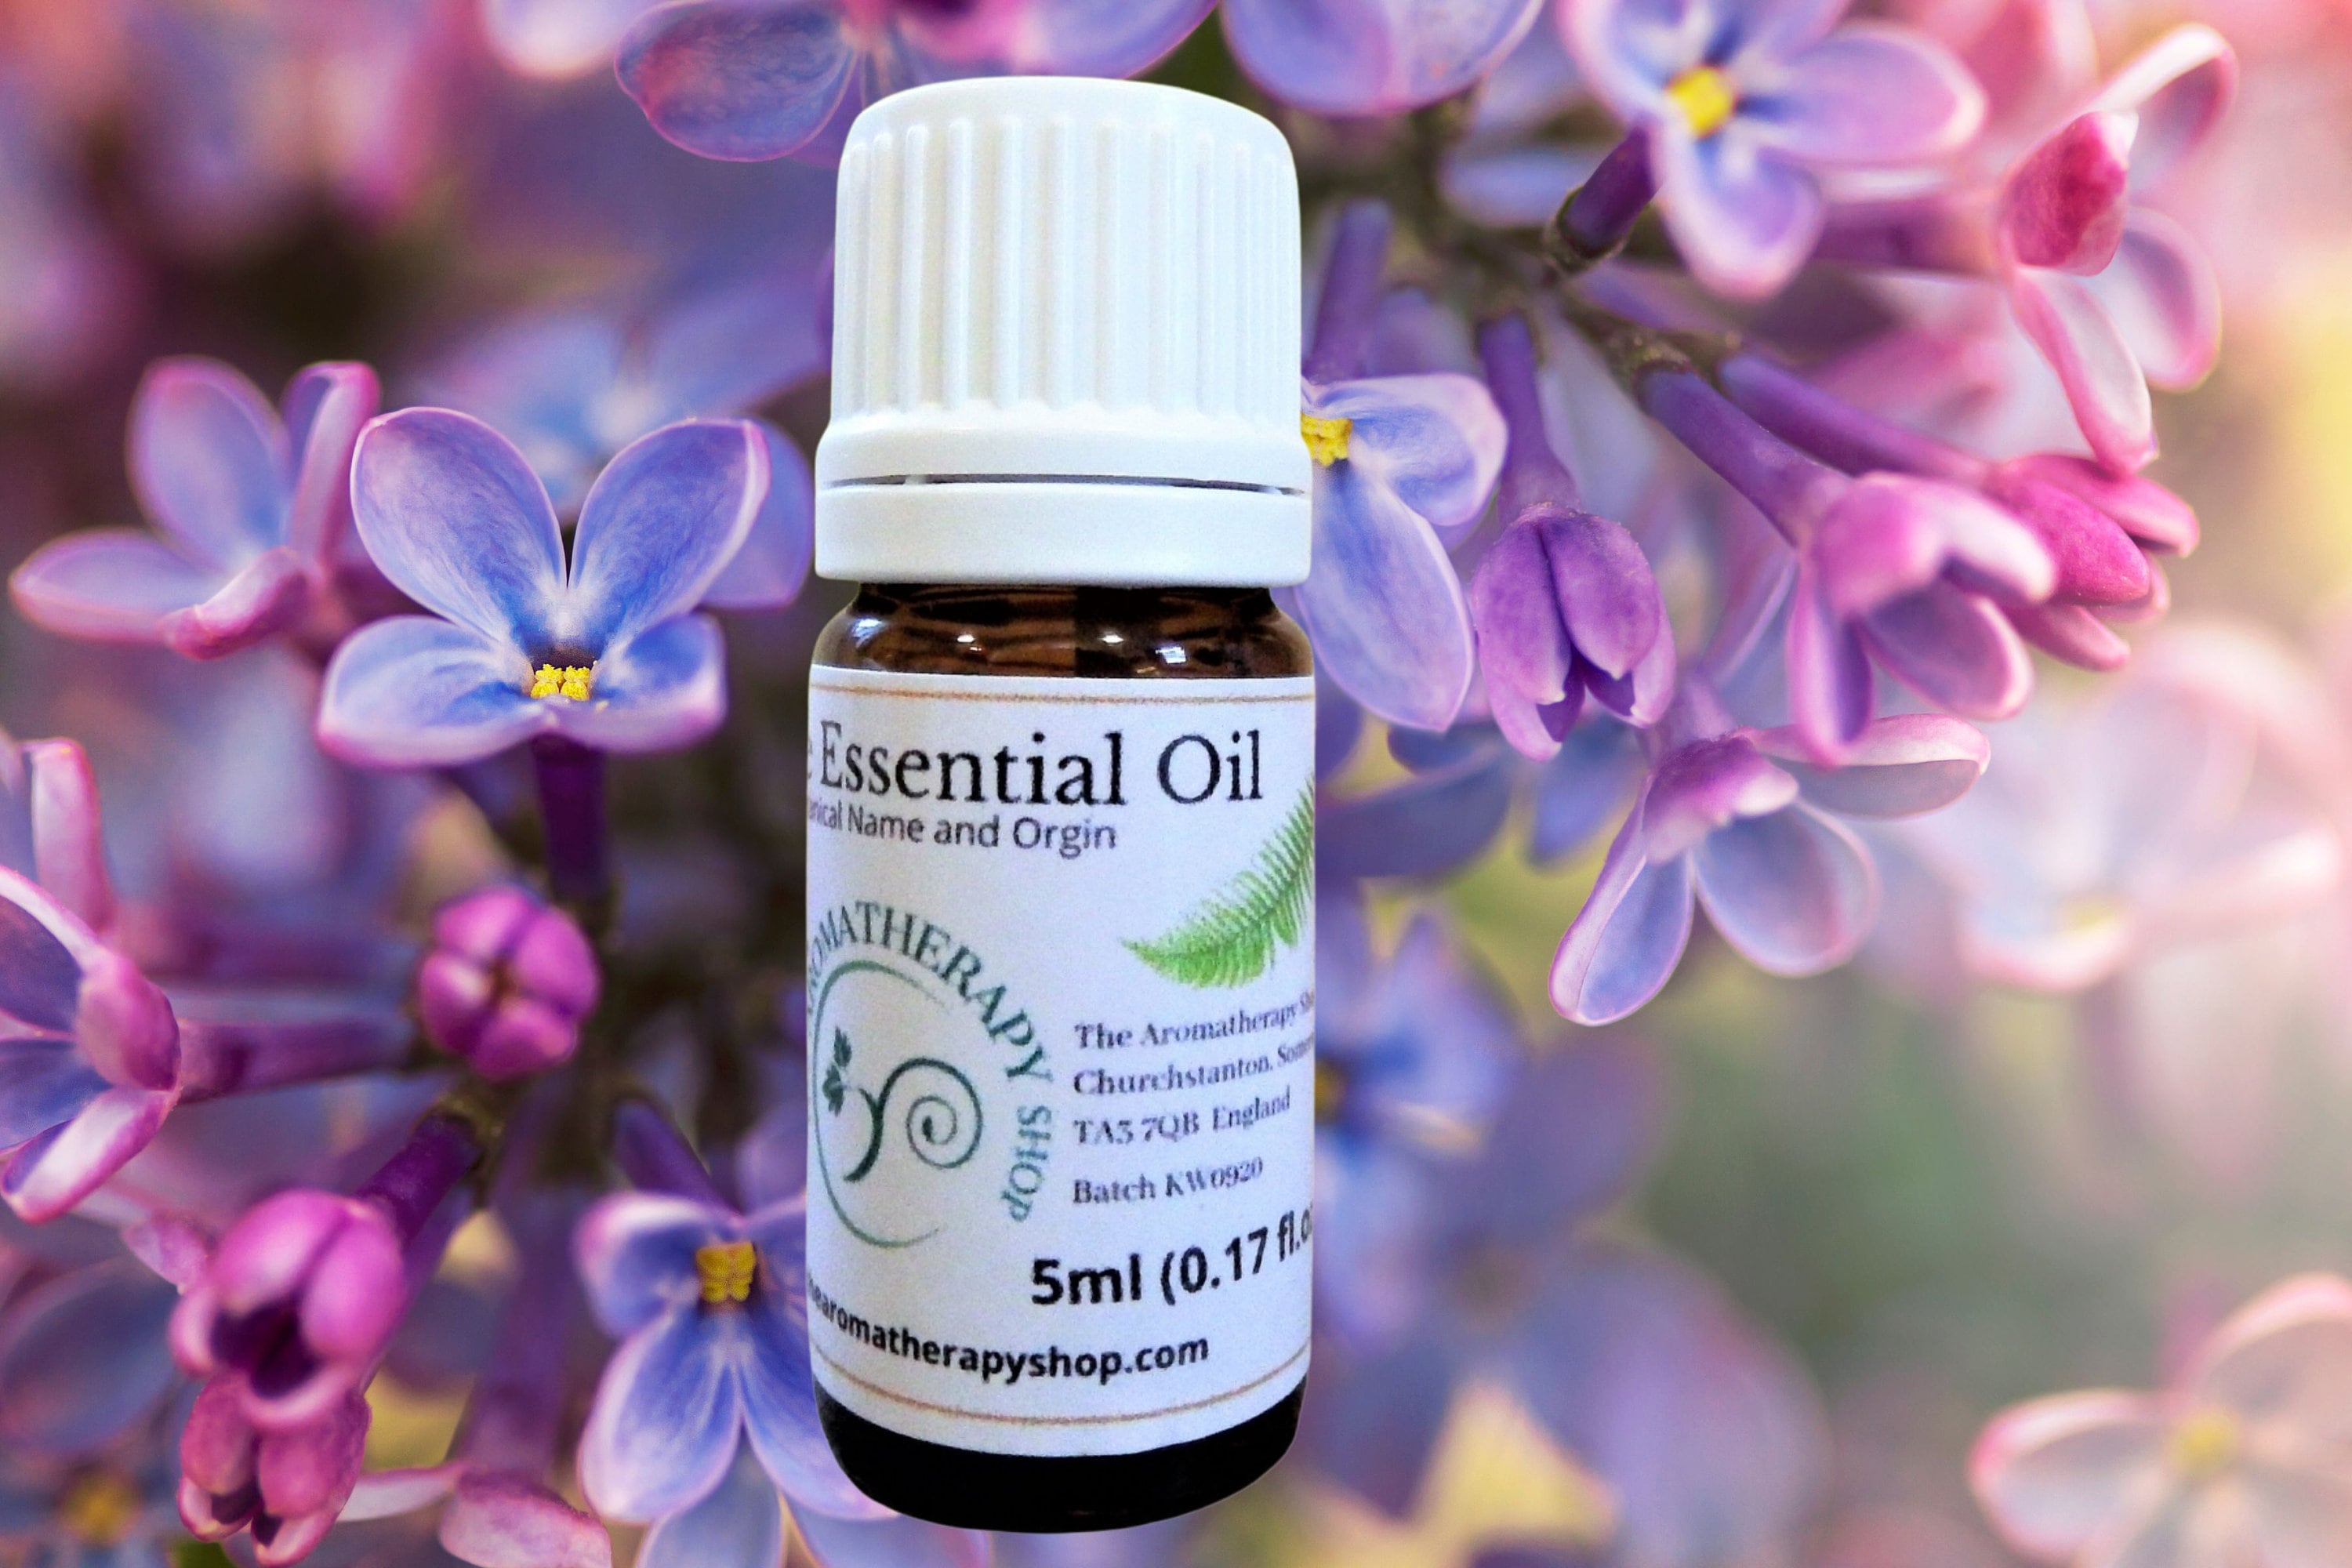 Lilac Absolute Organic - Syringia vulgaris Essential Oil